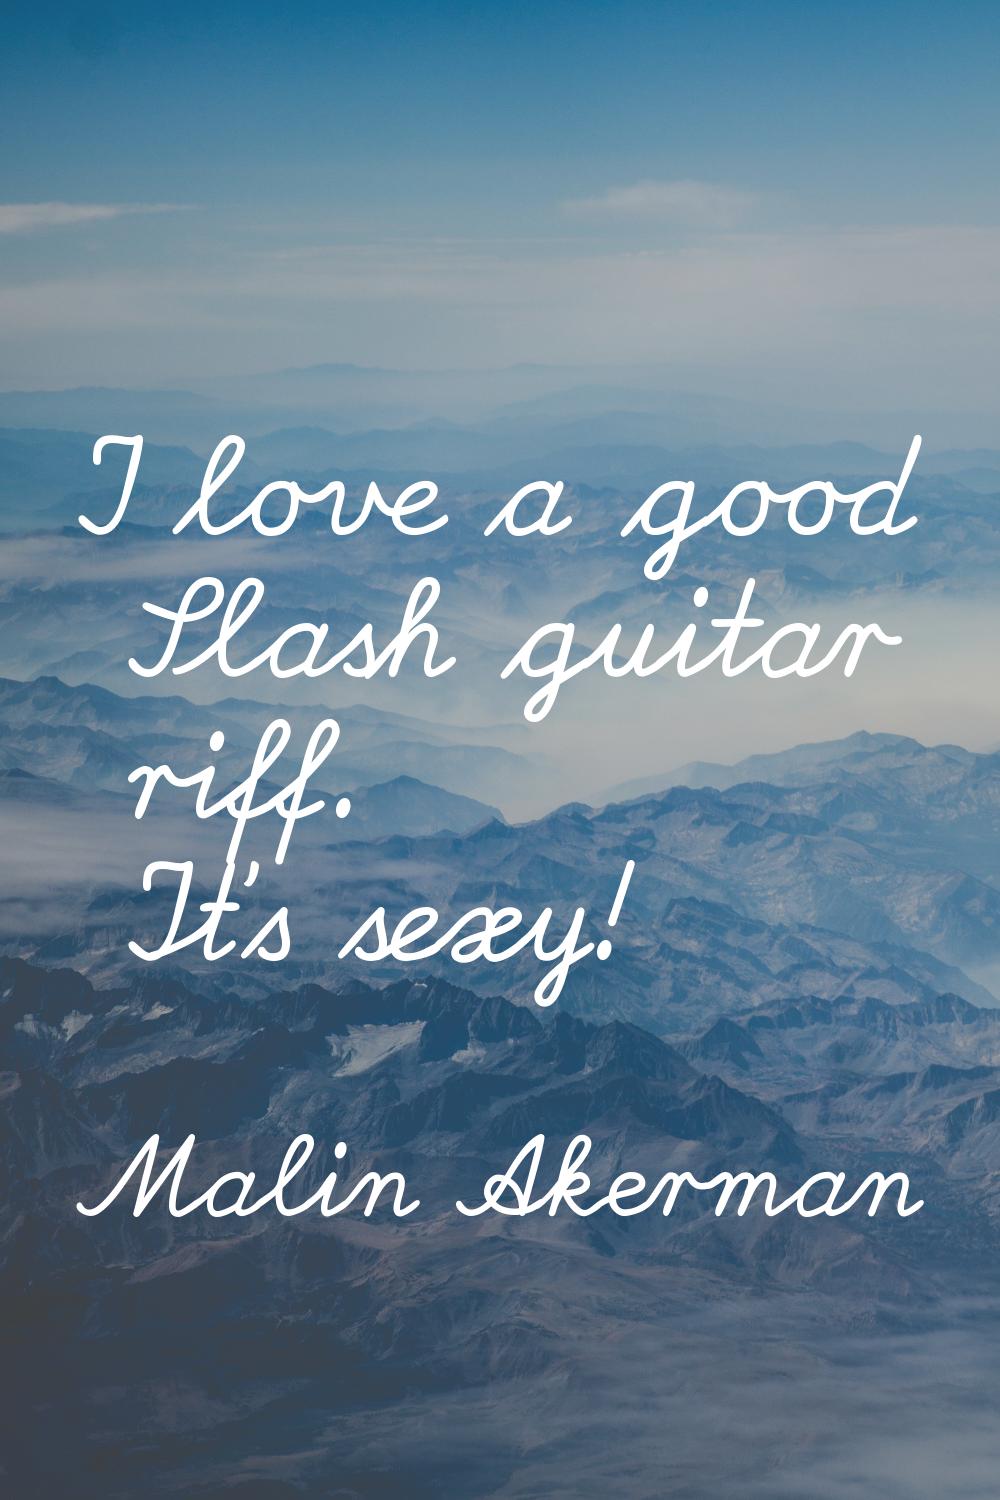 I love a good Slash guitar riff. It's sexy!